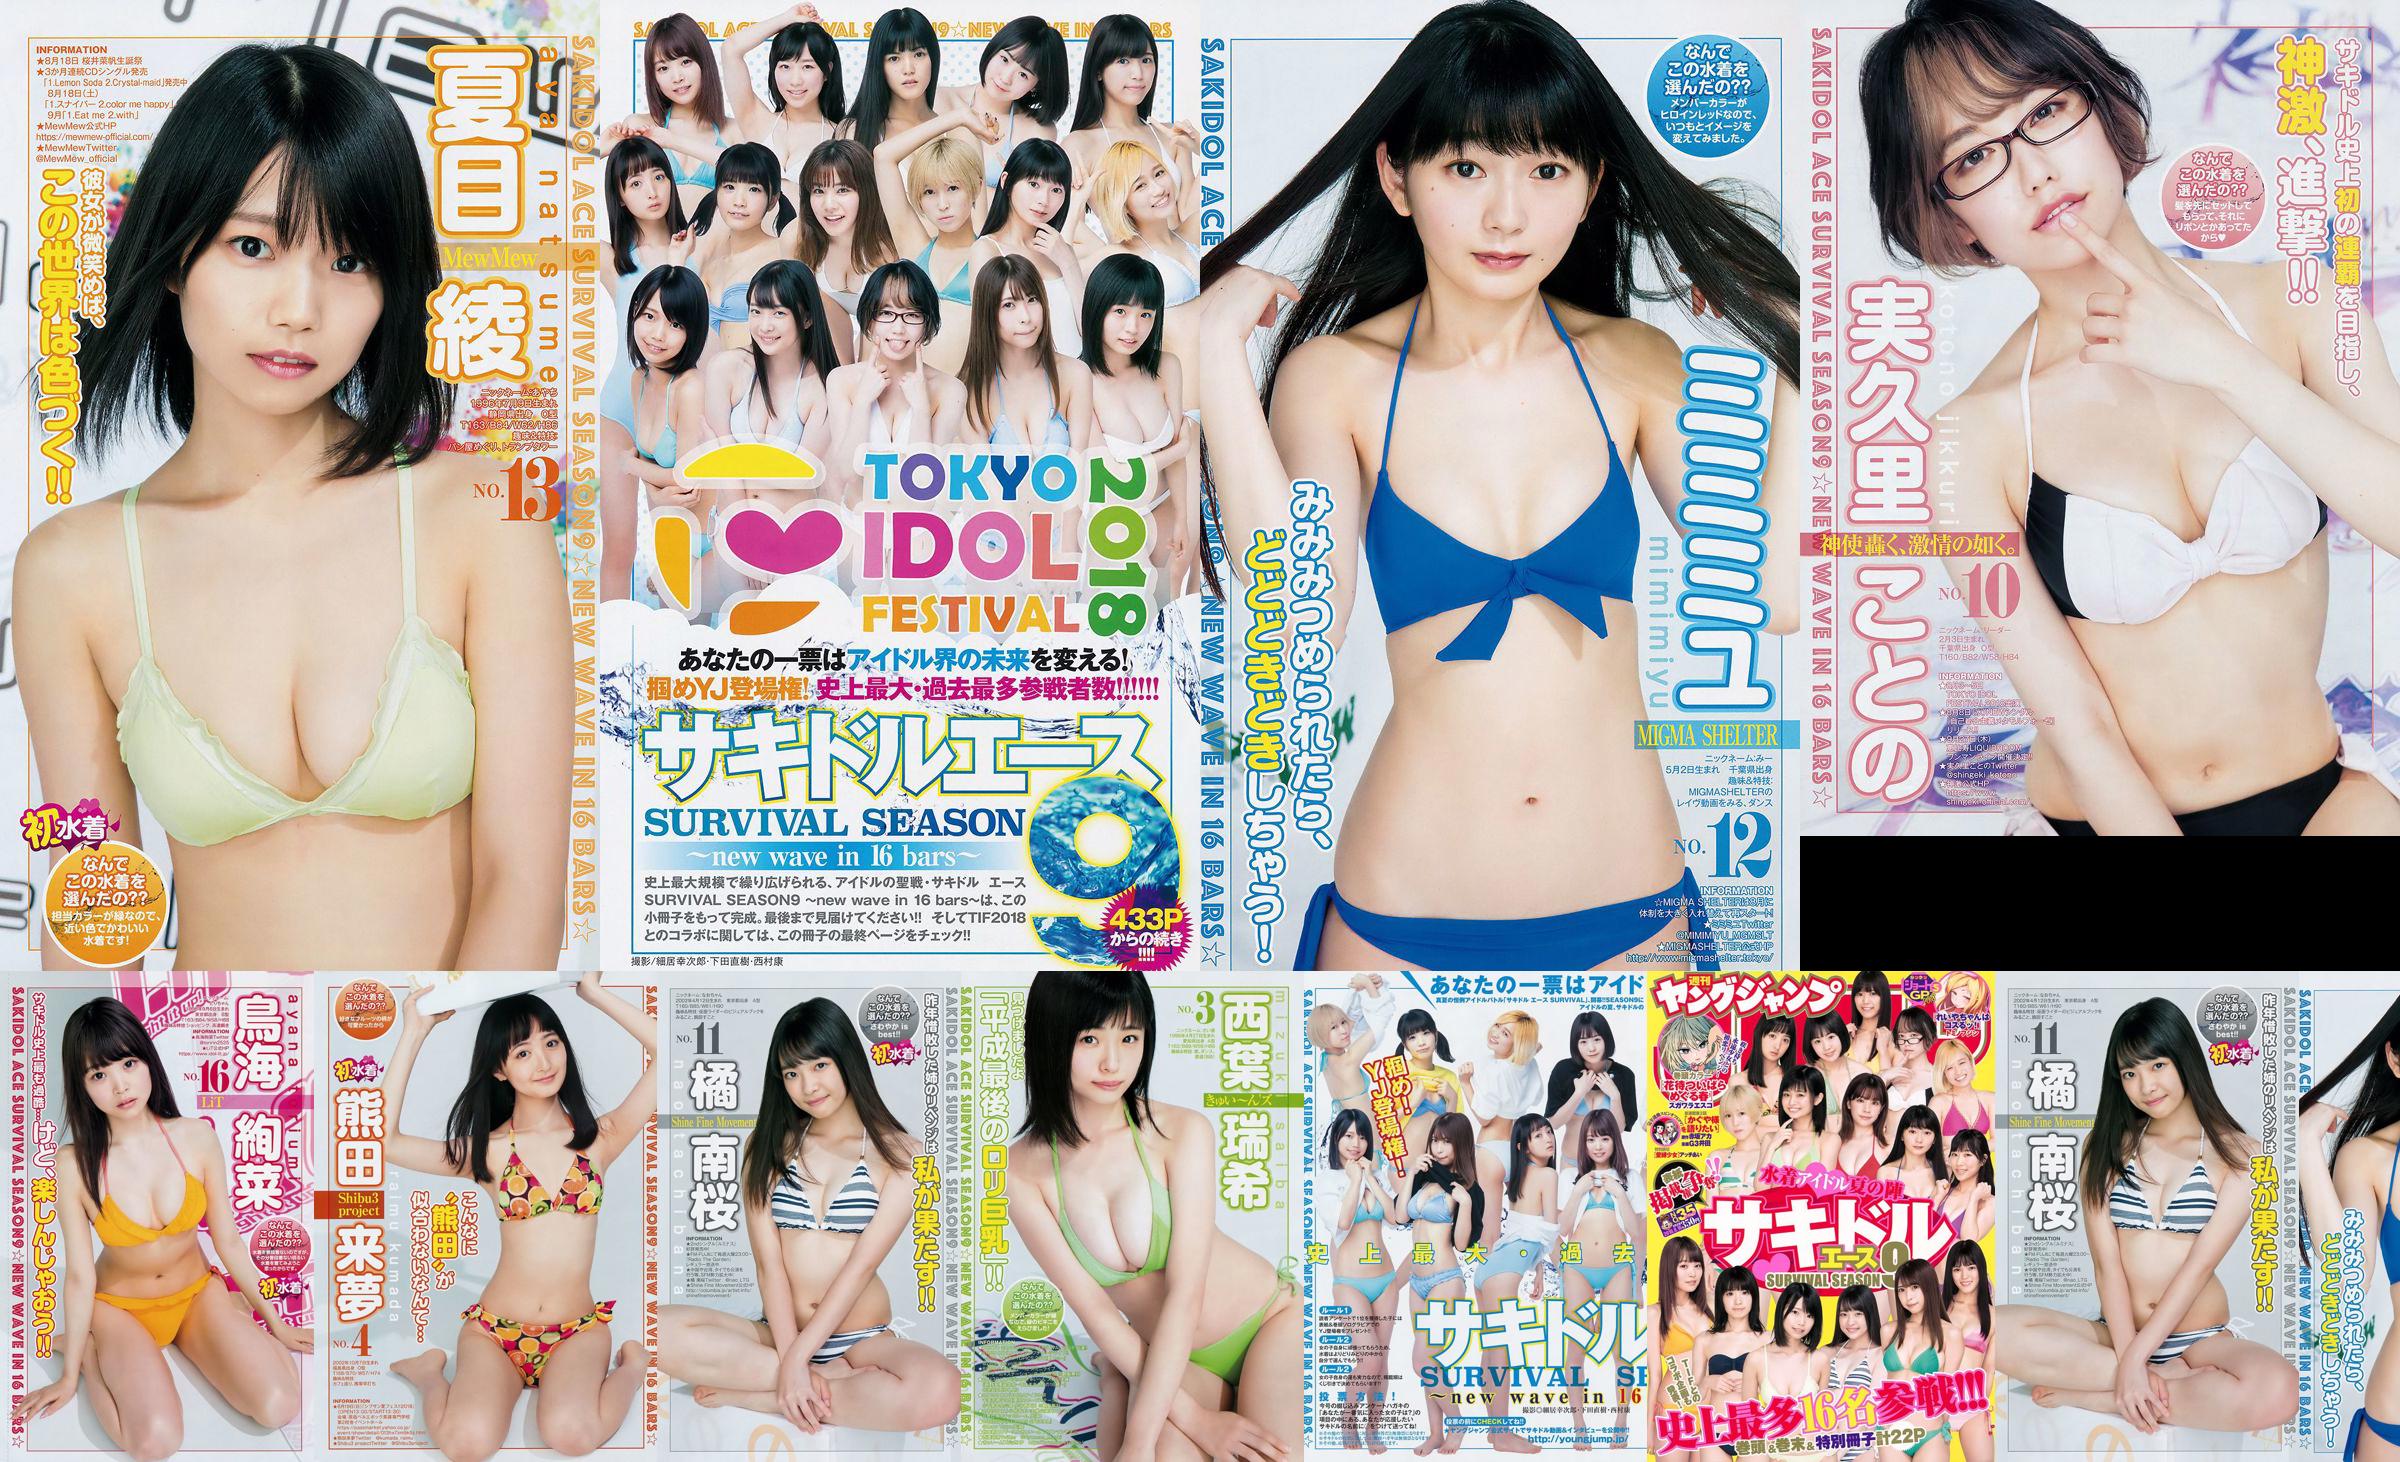 [FLASH] Ikumi Hisamatsu Risa Hirako Ren Ishikawa Angel Moe AKB48 Kaho Shibuya Misuzu Hayashi Ririka 2015.04.21 Photo Toshi No.170f89 Page 1